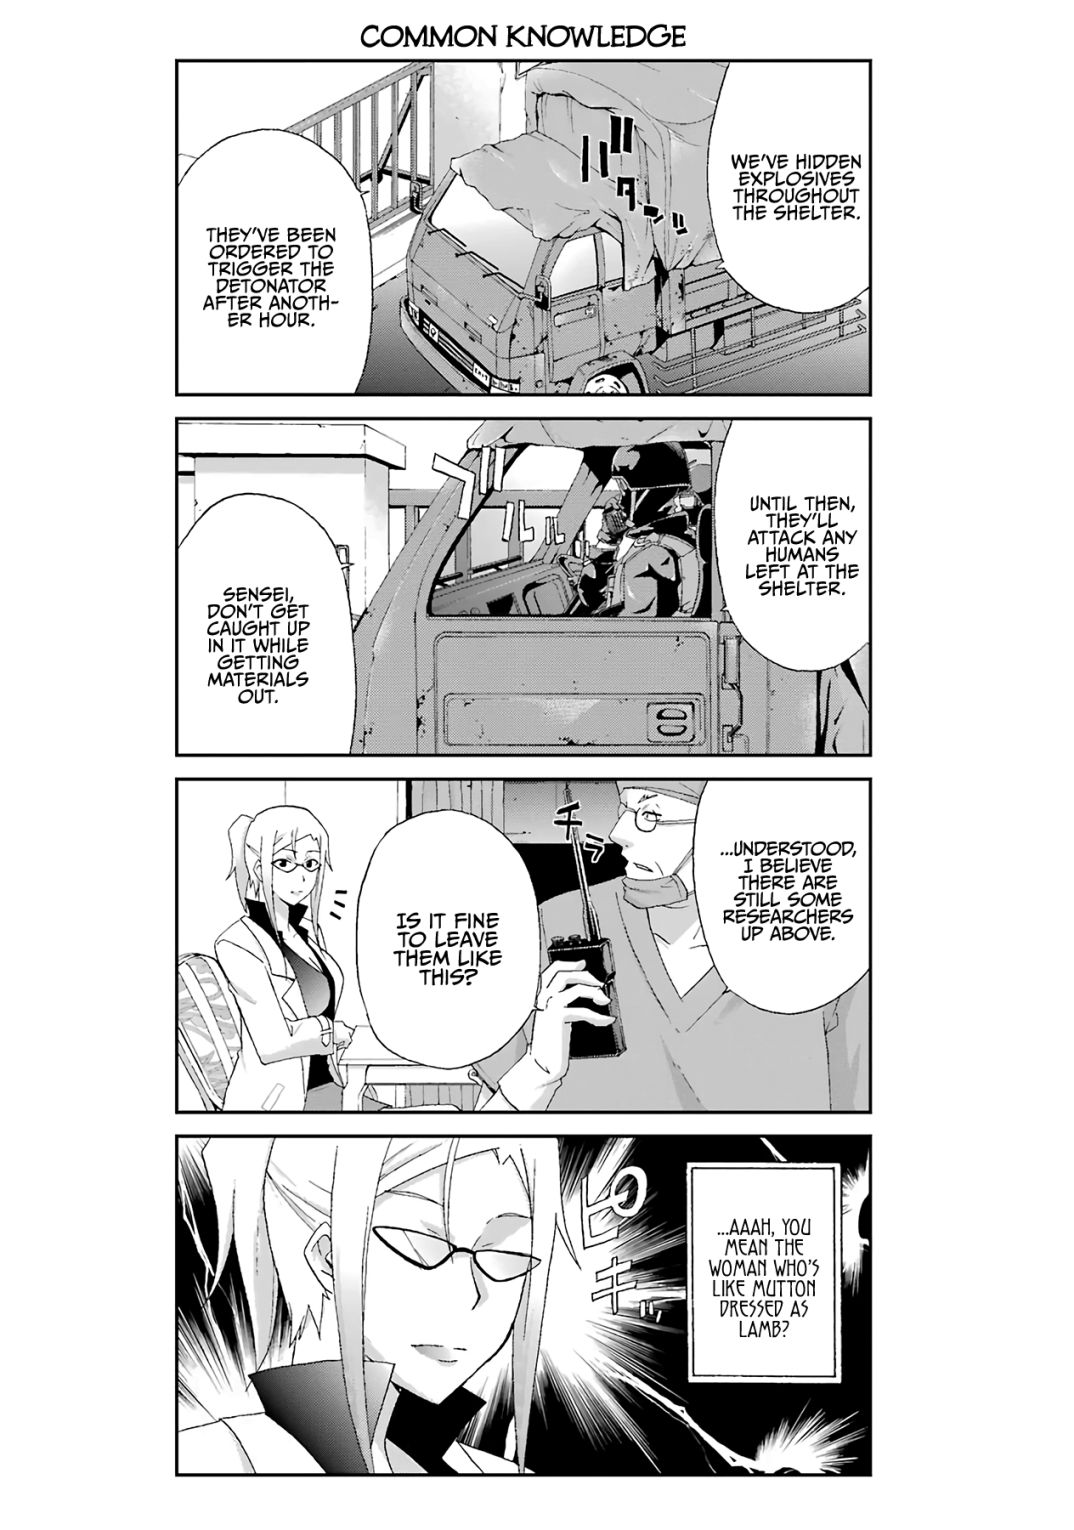 Are You Alive Honda-Kun? - Page 2